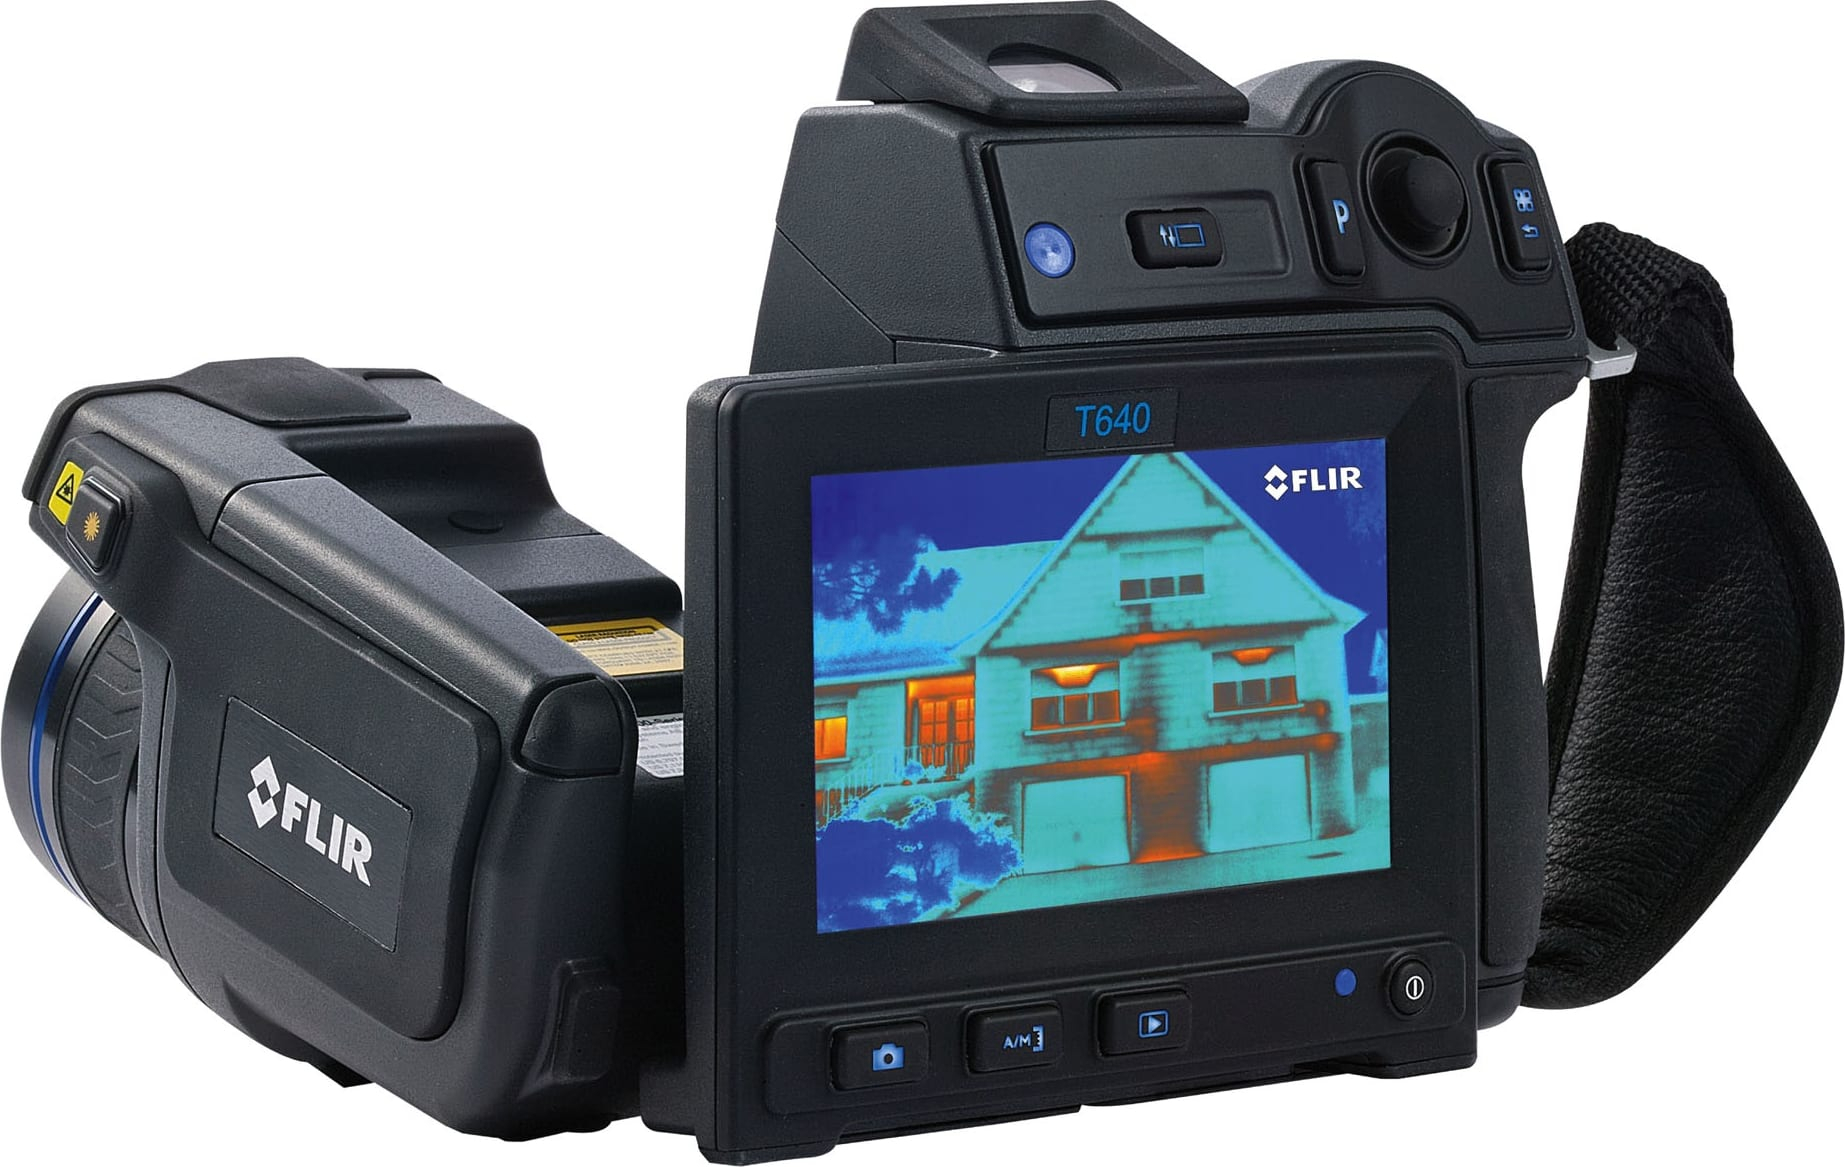 Flir T640 45 Thermal Imaging Infrared Camera 640 X 480 Within Thermal Imaging Report Template